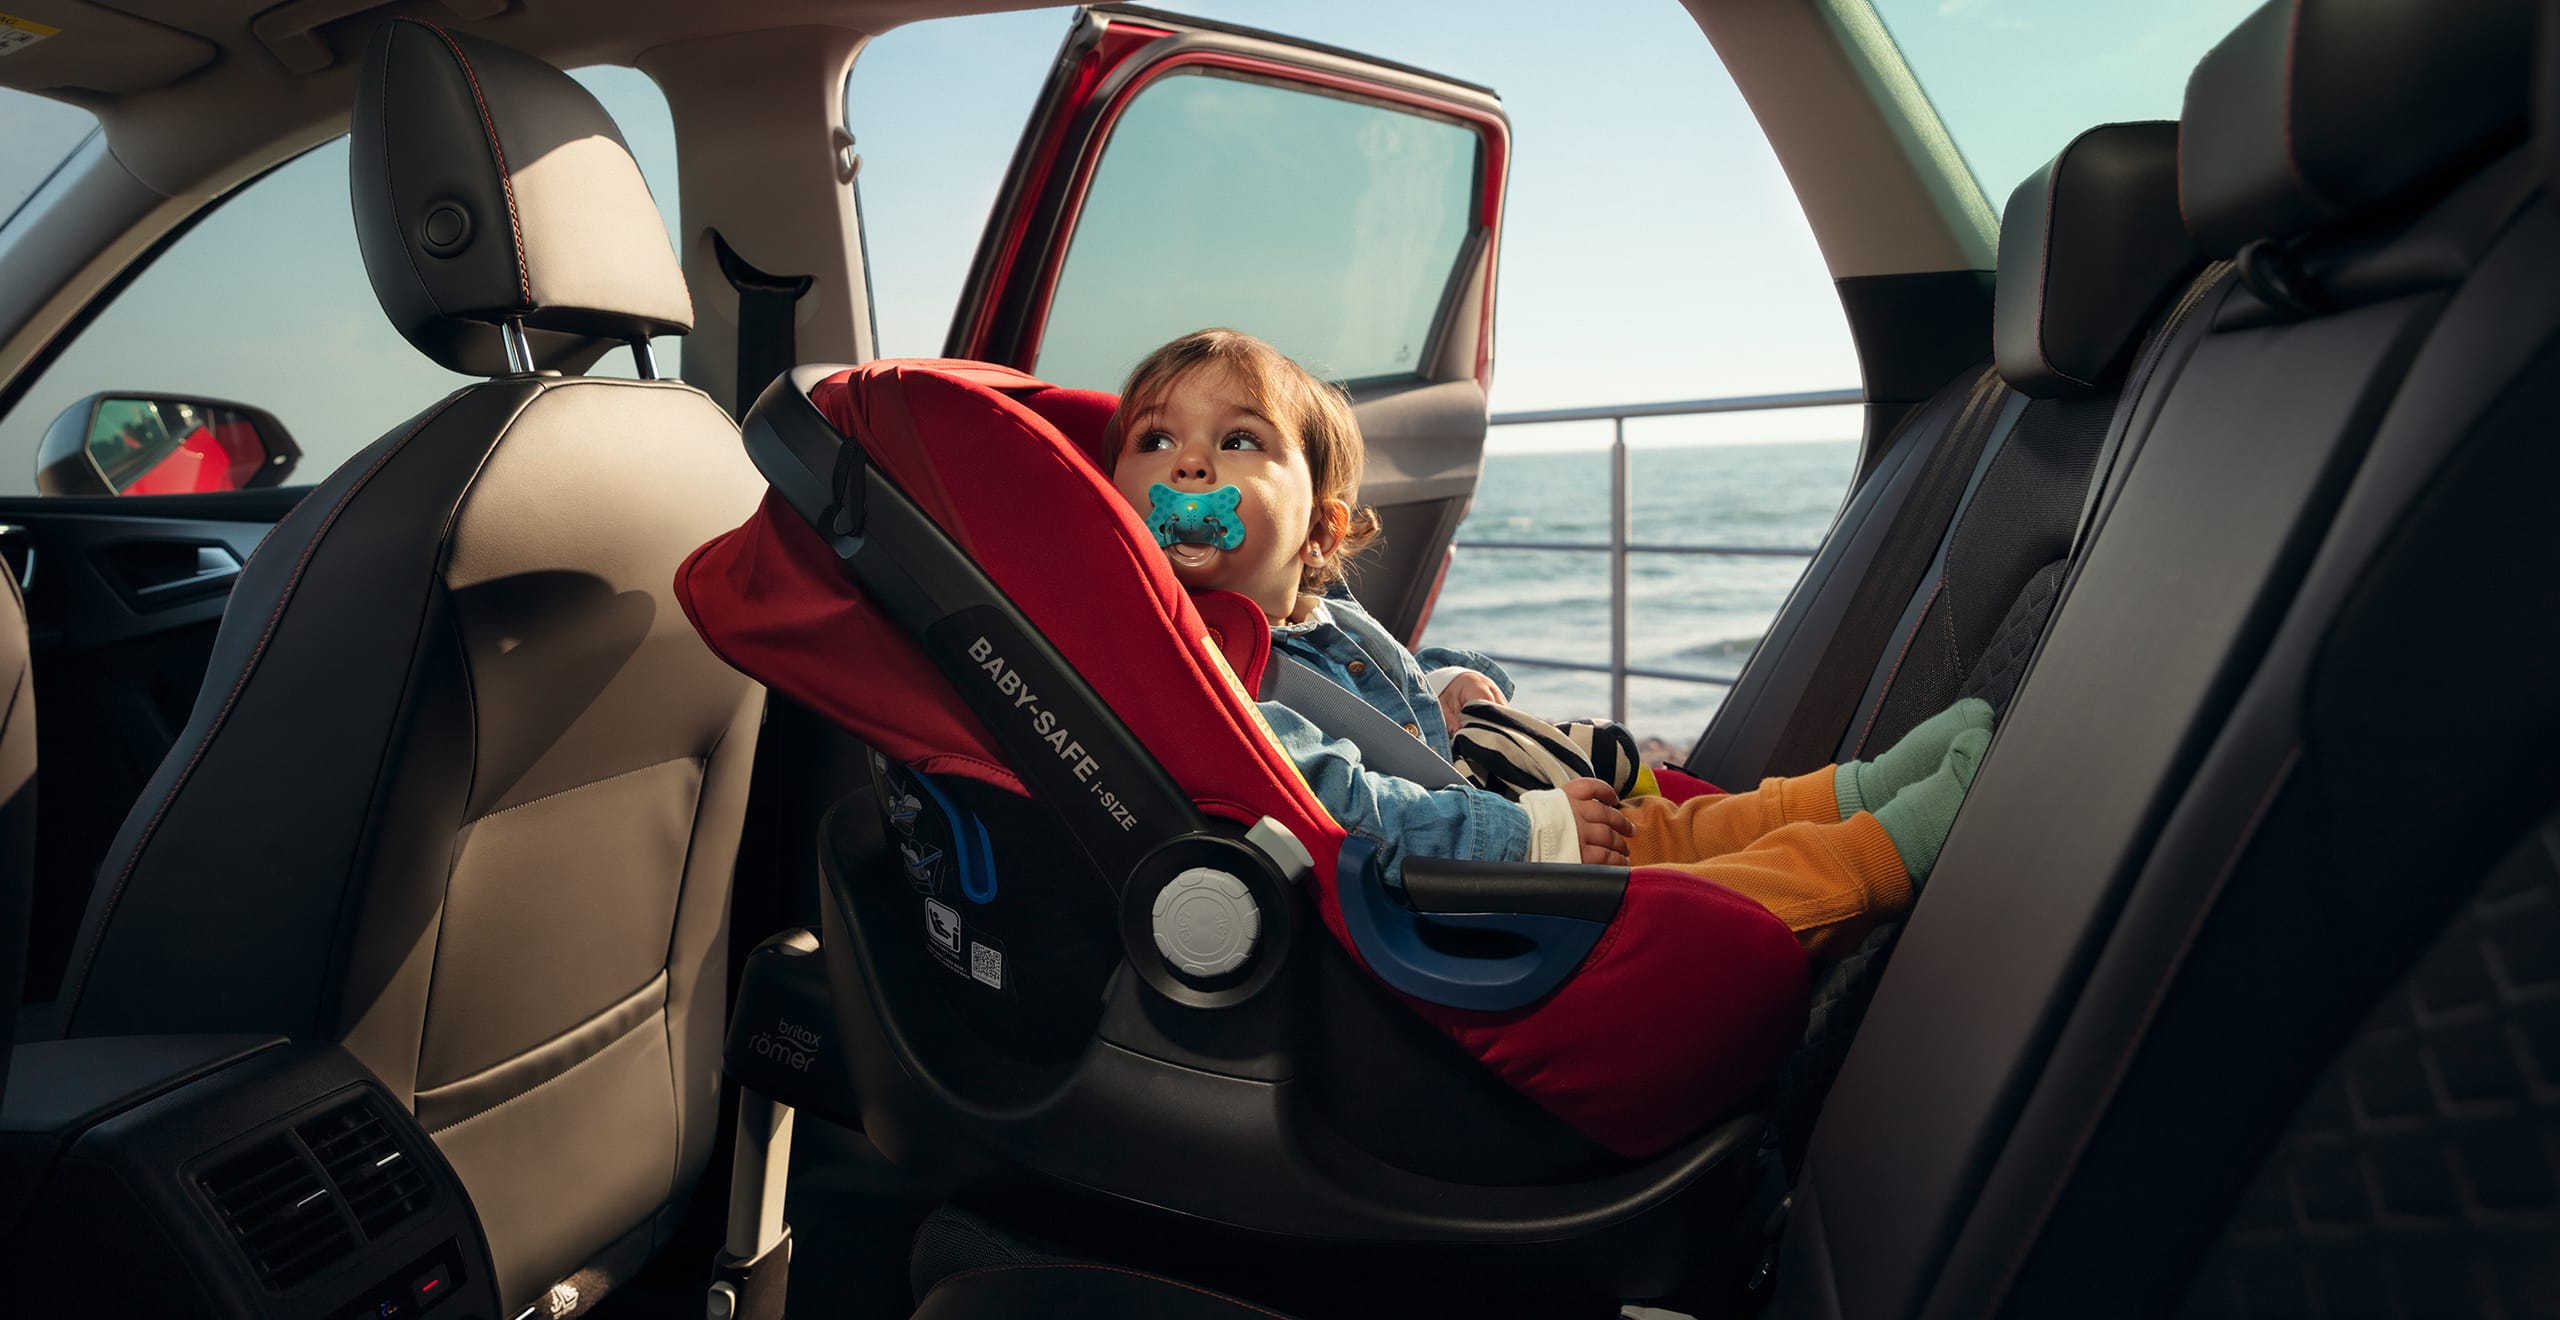 New Leon Sportstourer car accessories child’s safety seat